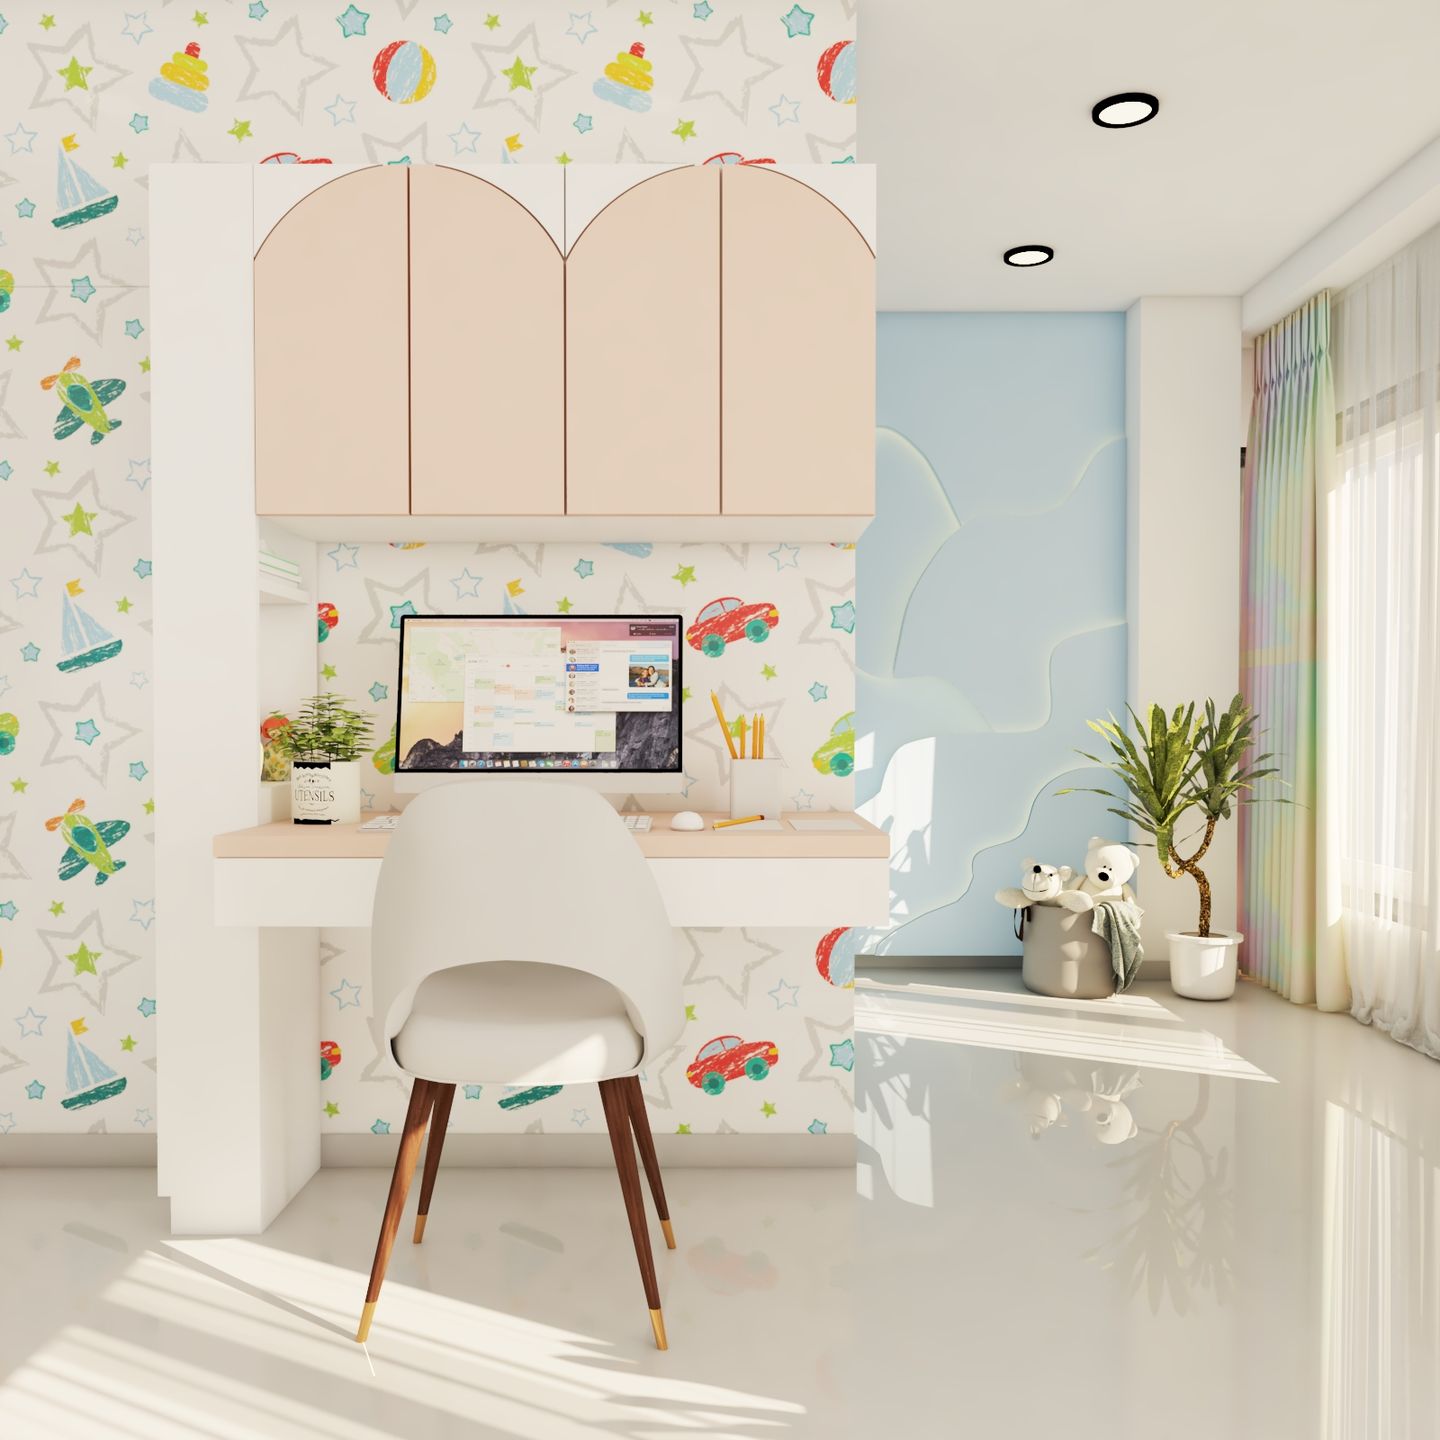 Spacious Home Office Design - Livspace